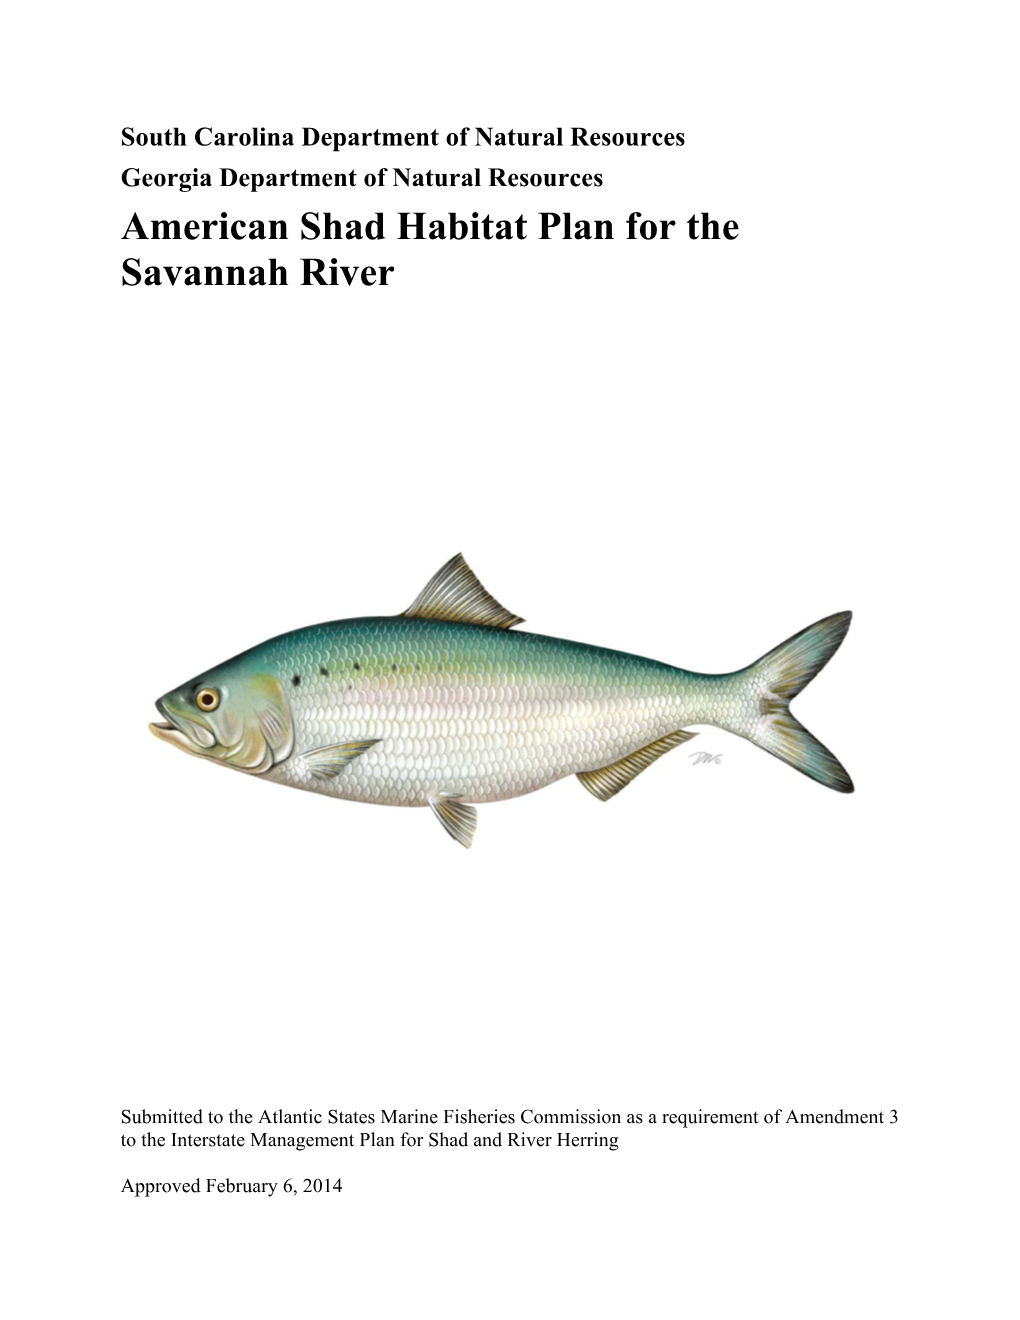 American Shad Habitat Plan for the Savannah River